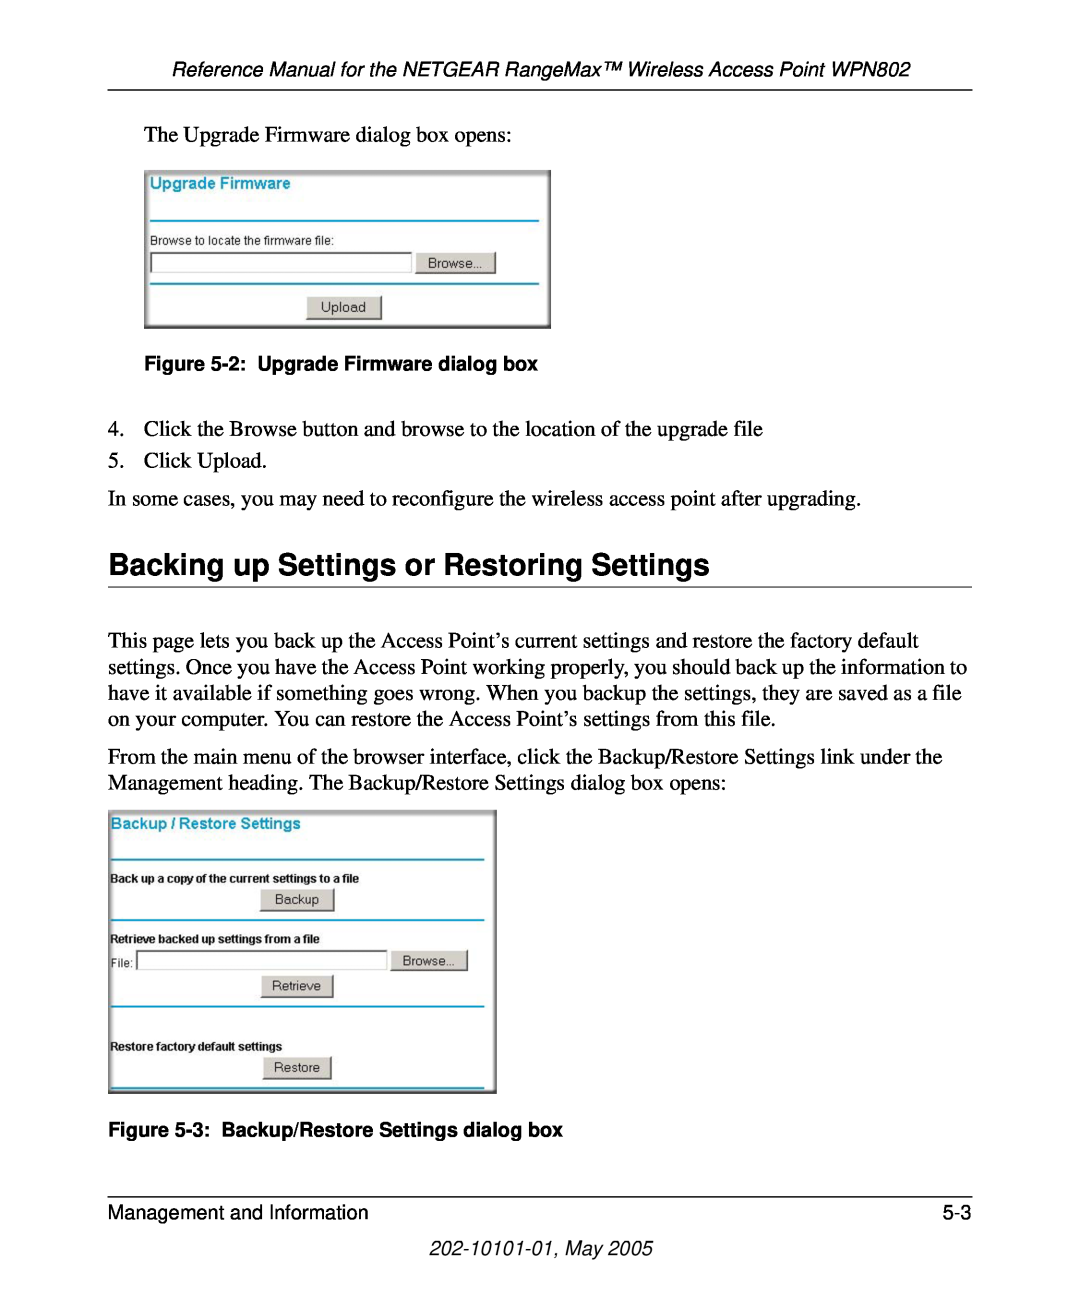 NETGEAR WPN802 manual Backing up Settings or Restoring Settings 